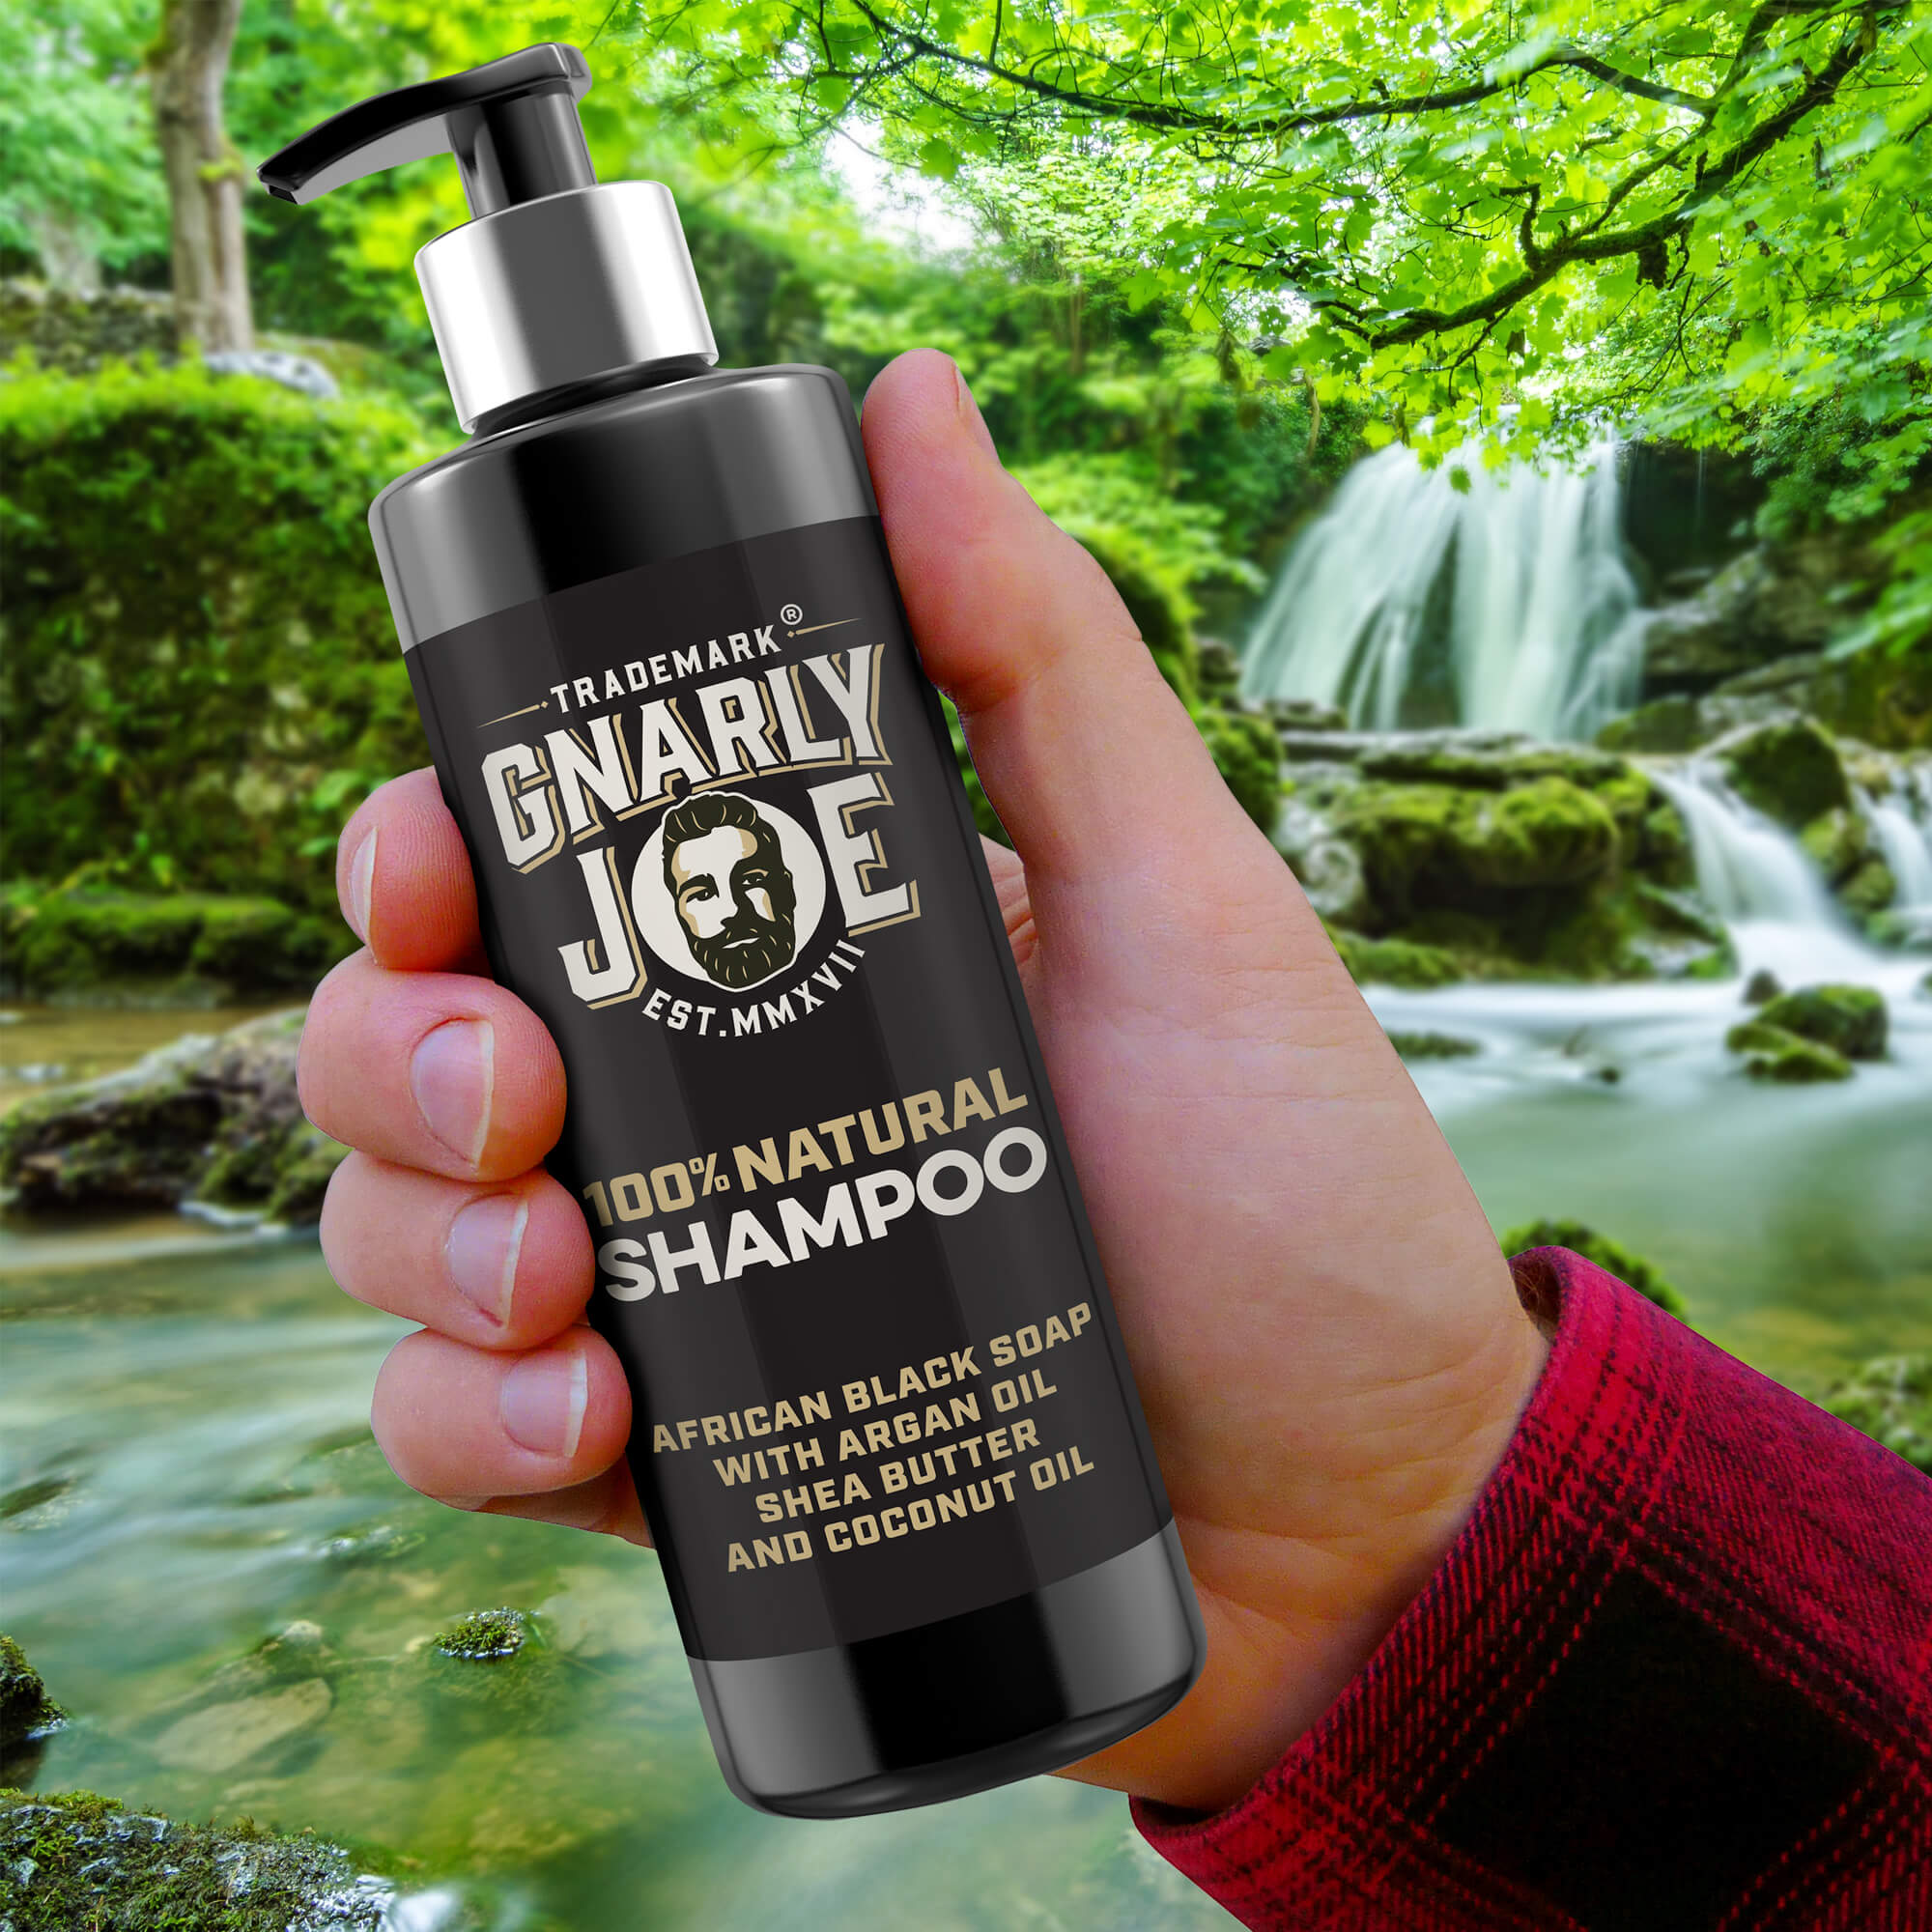 100% Shampoo. African Black Soap with Argan Oil, Shea Butter a - Gnarly Joe